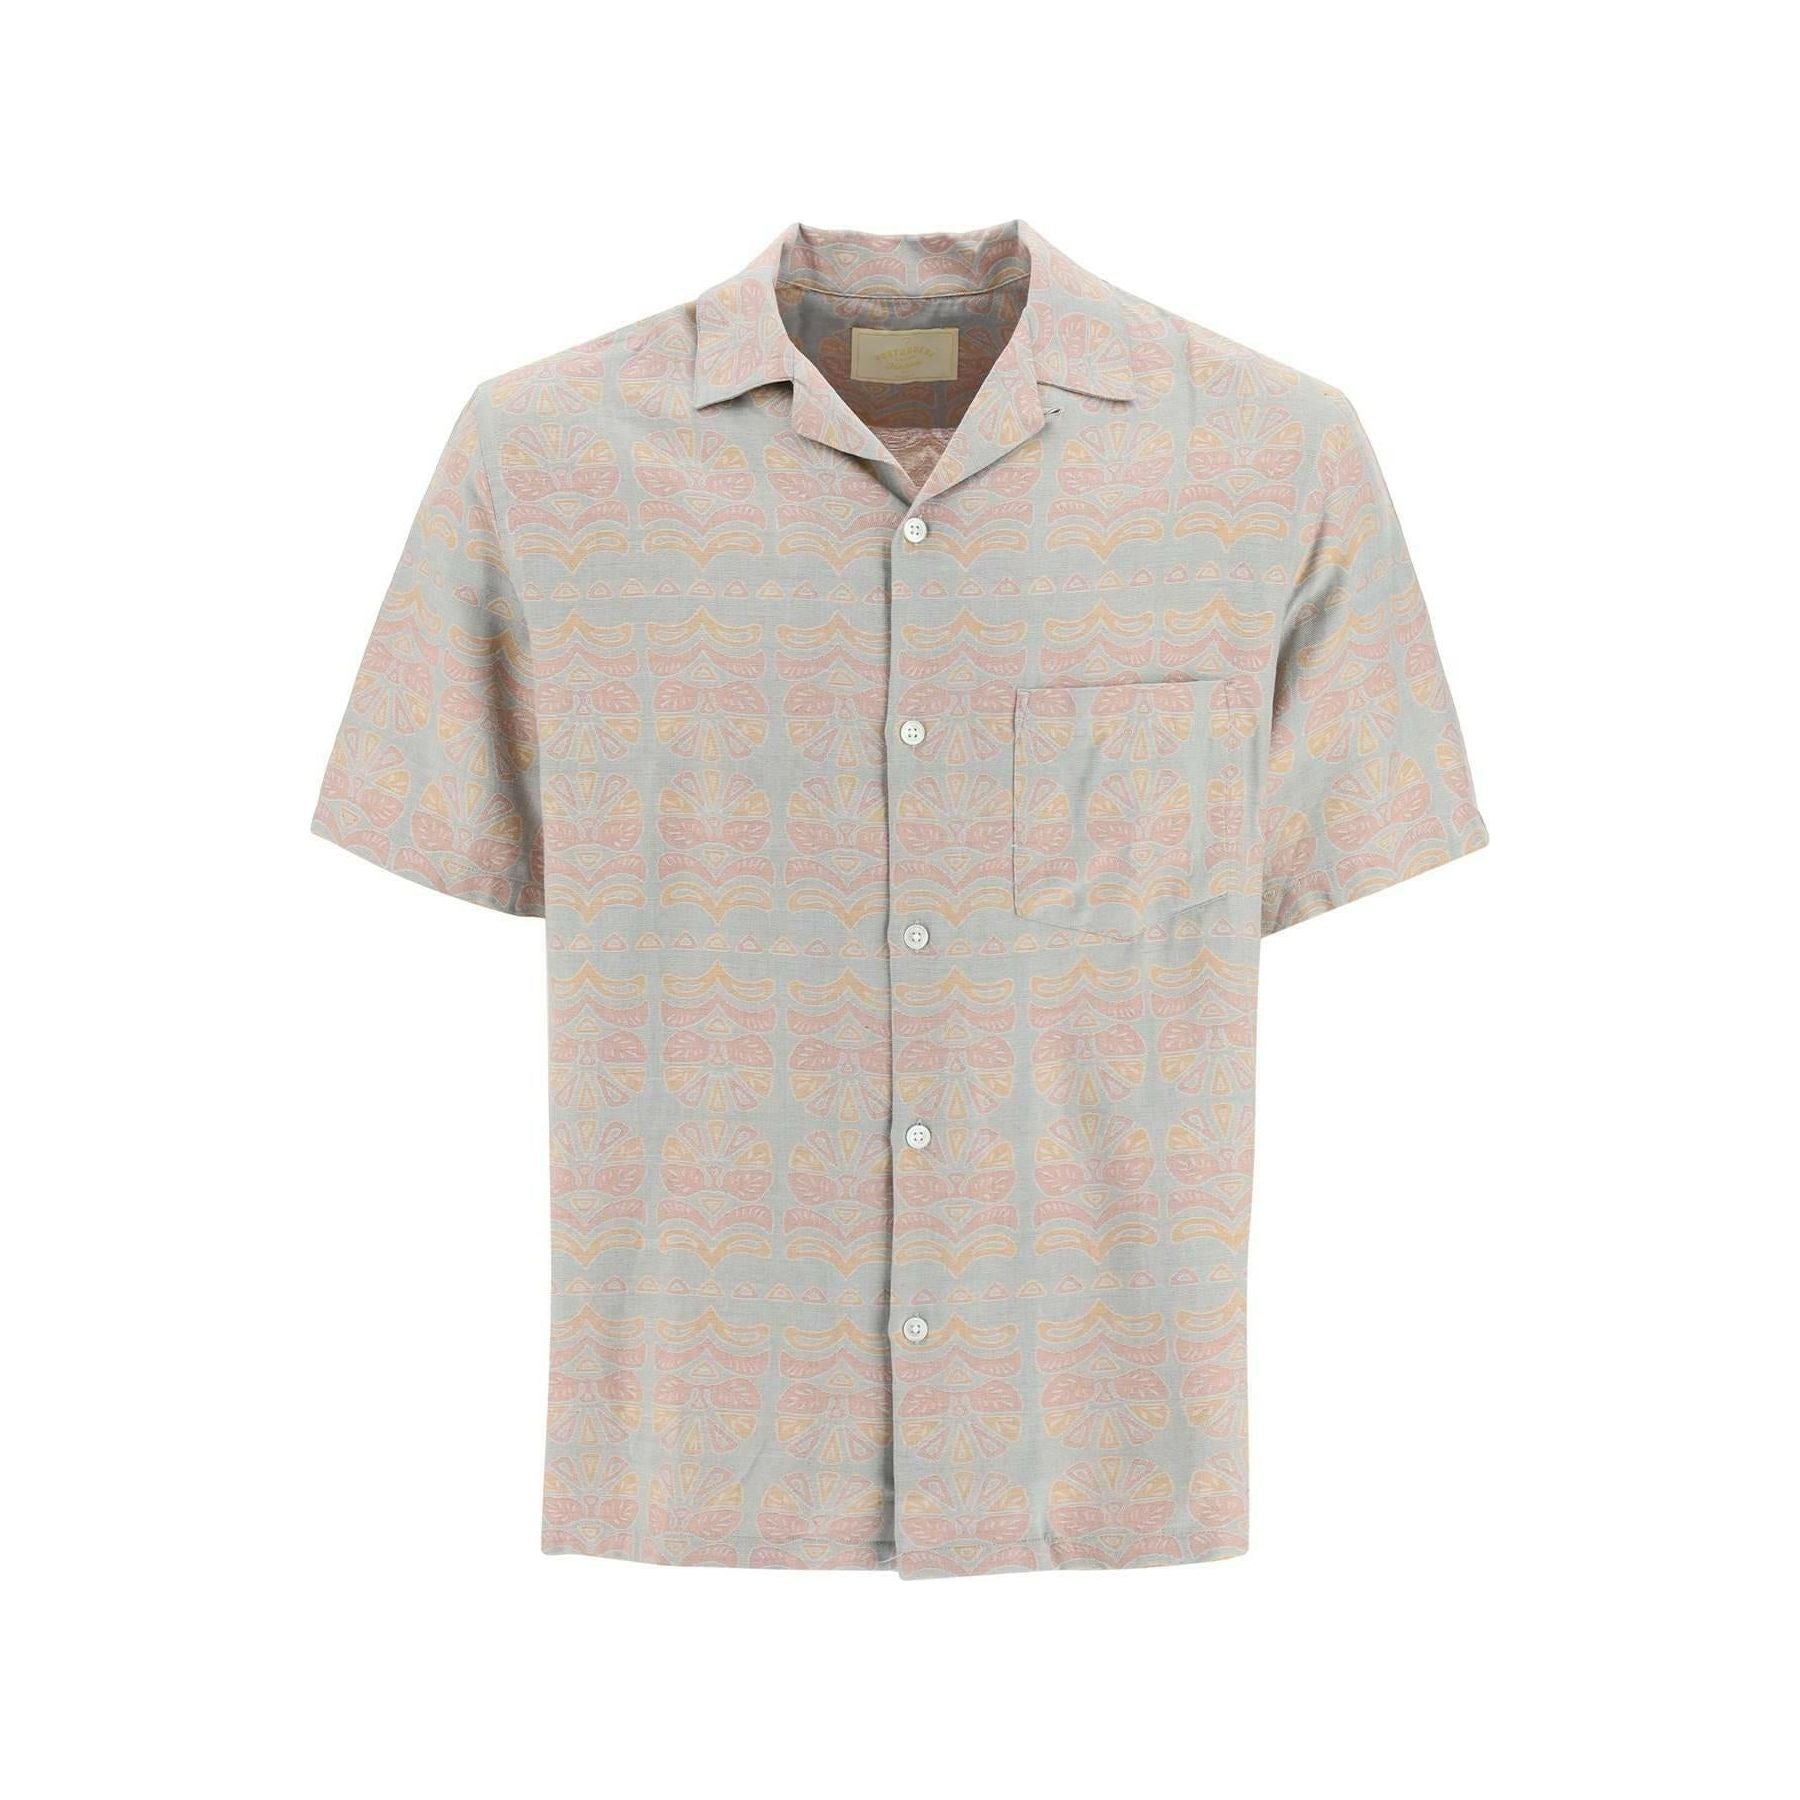 Cotton Viscose 'Resort' Short Sleeve Shirt PORTUGUESE FLANNEL JOHN JULIA.